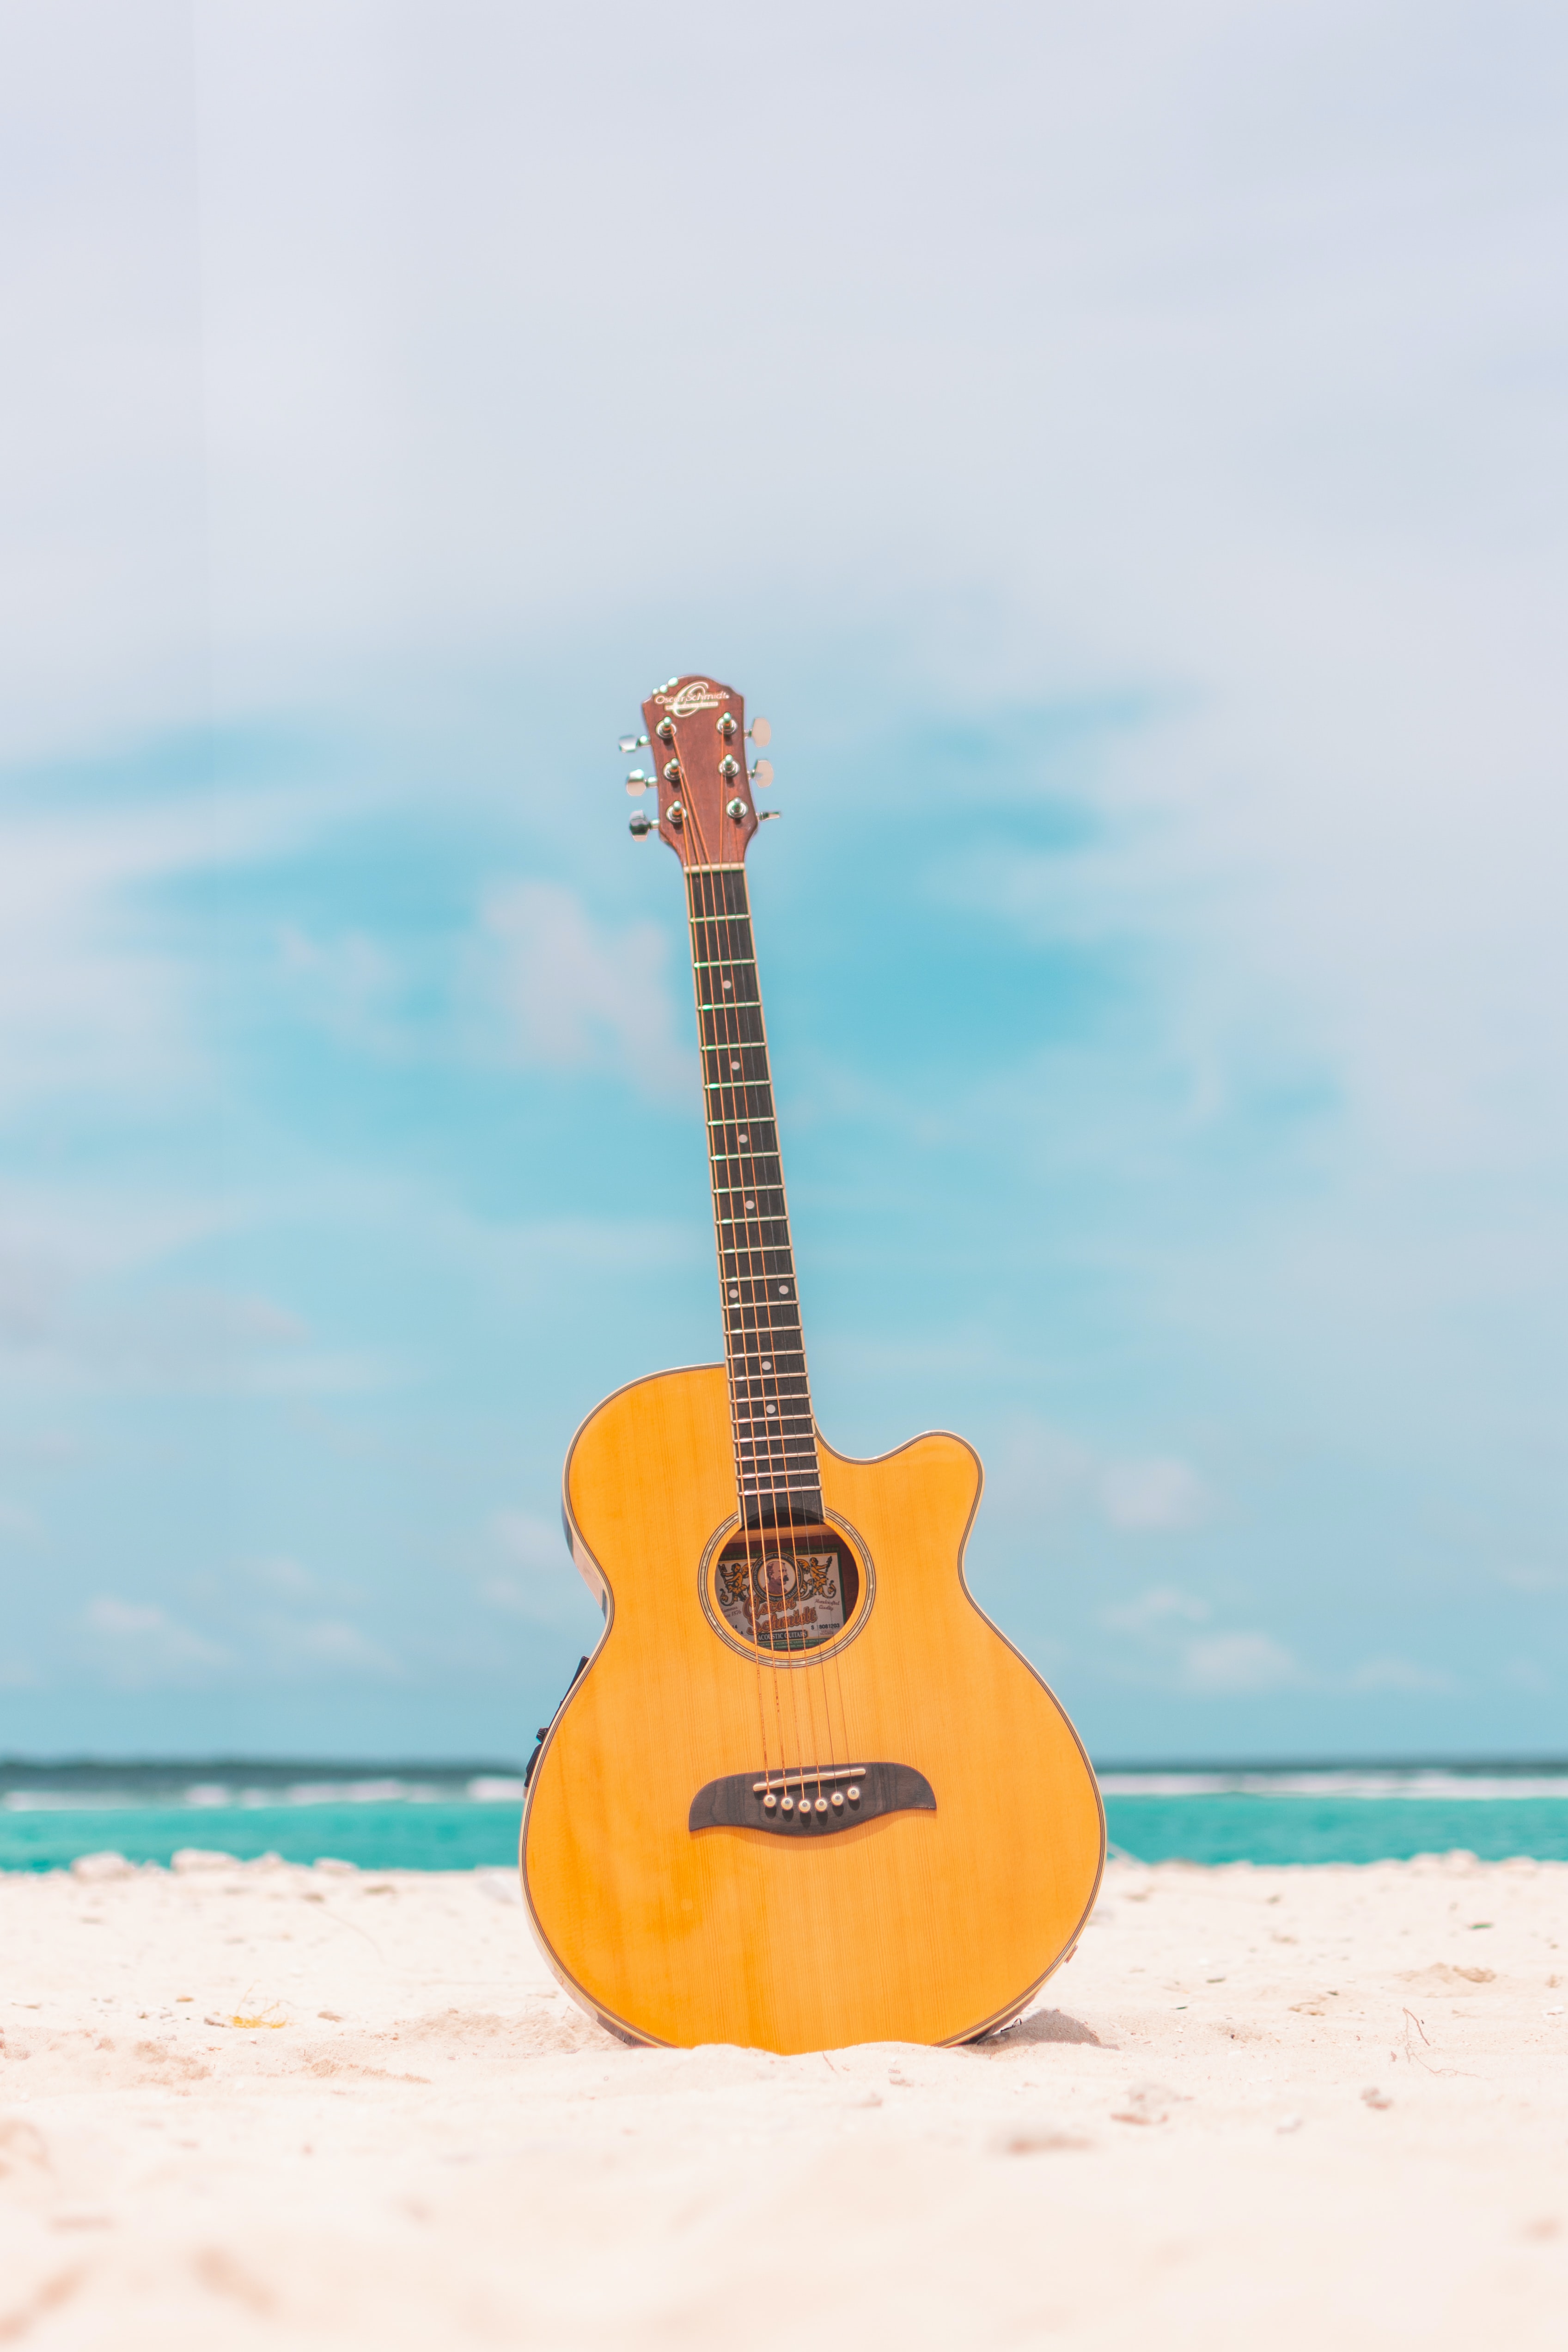 guitar, acoustic guitar, beach, music, summer, tool cellphone